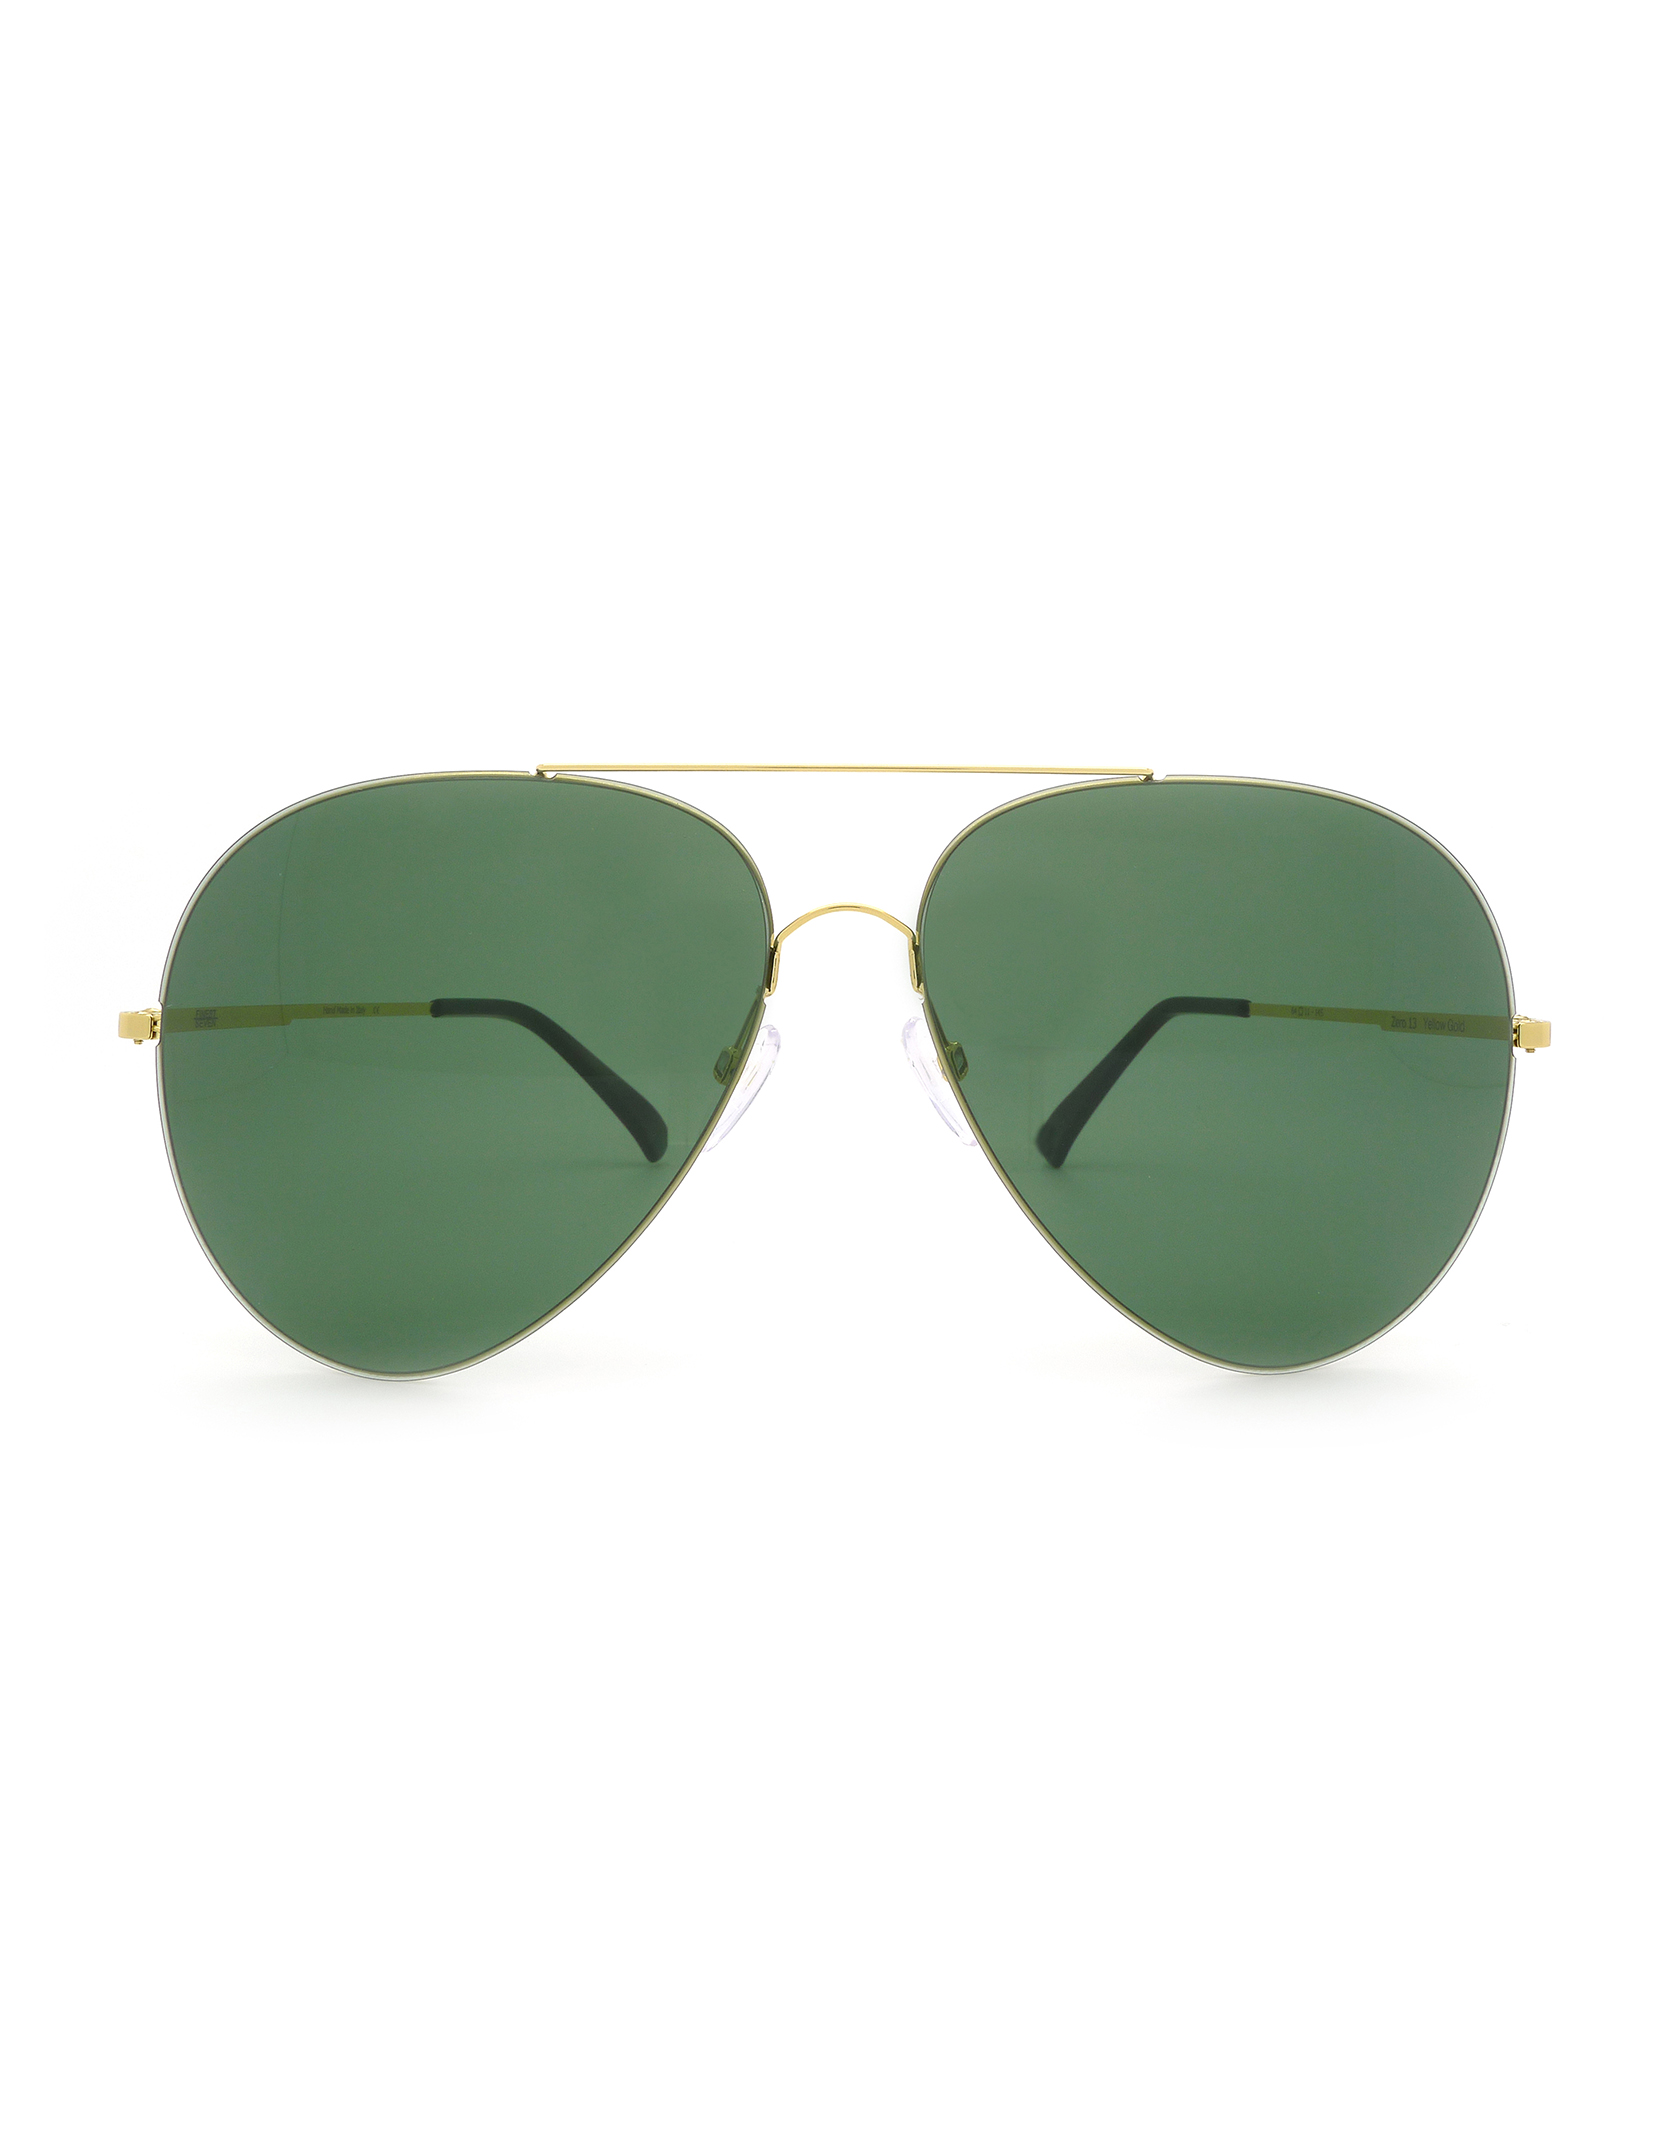 ZERO 13 Dark Green - Luxury Sunglasses, Designer Sunglasses | Finest Seven